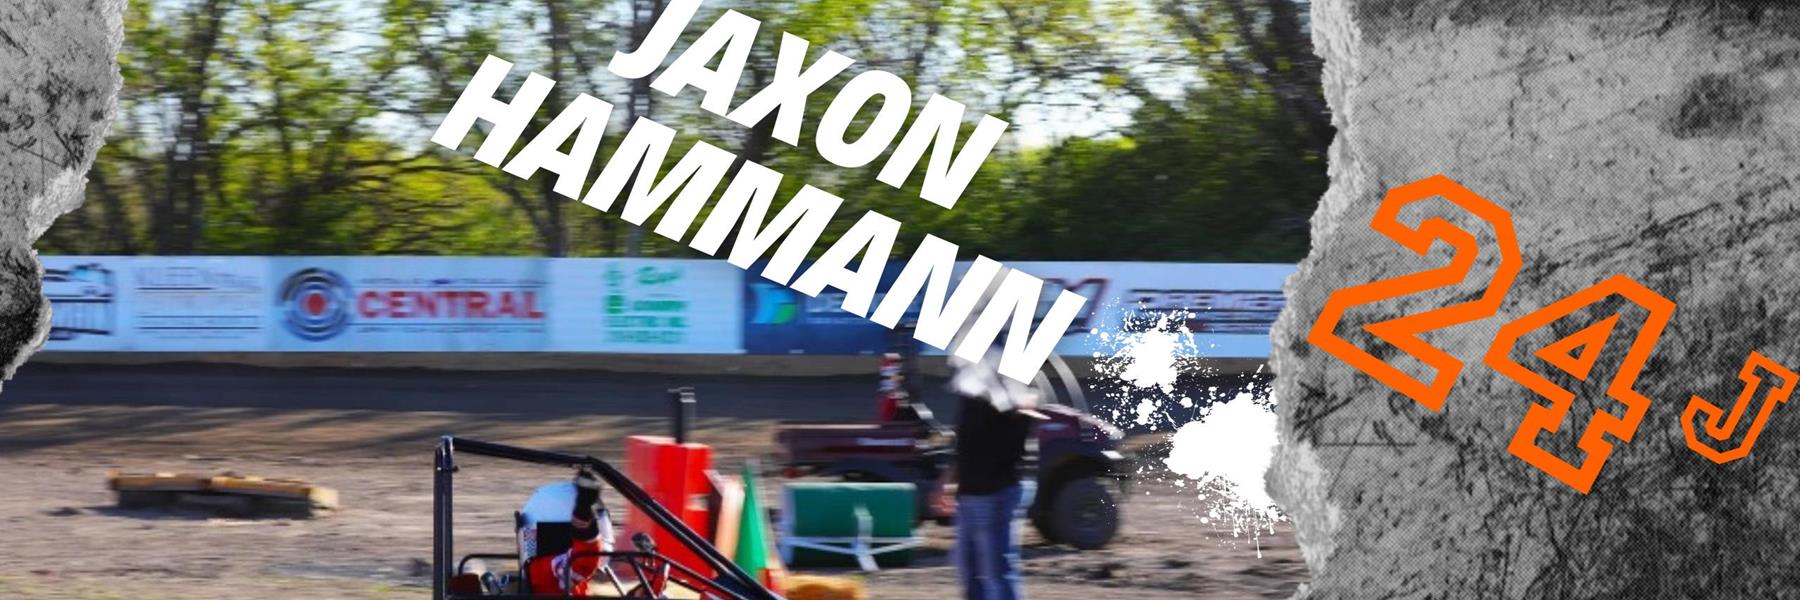 Jaxon Hammann